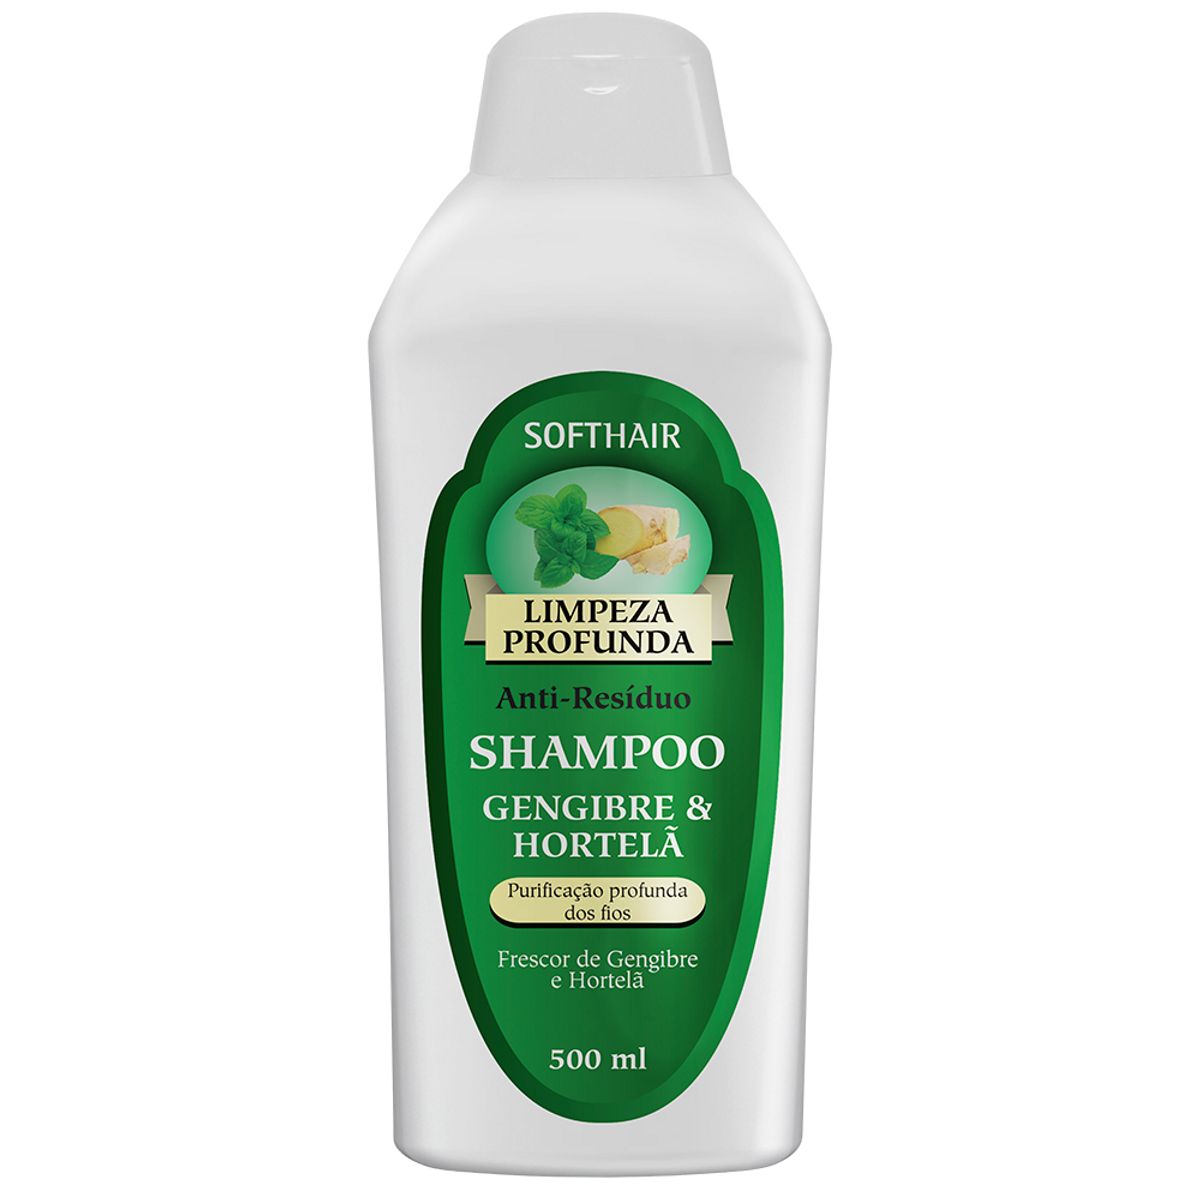 Shampoo Softhair Anti-Resíduo Gengibre e Hortelã 500ml